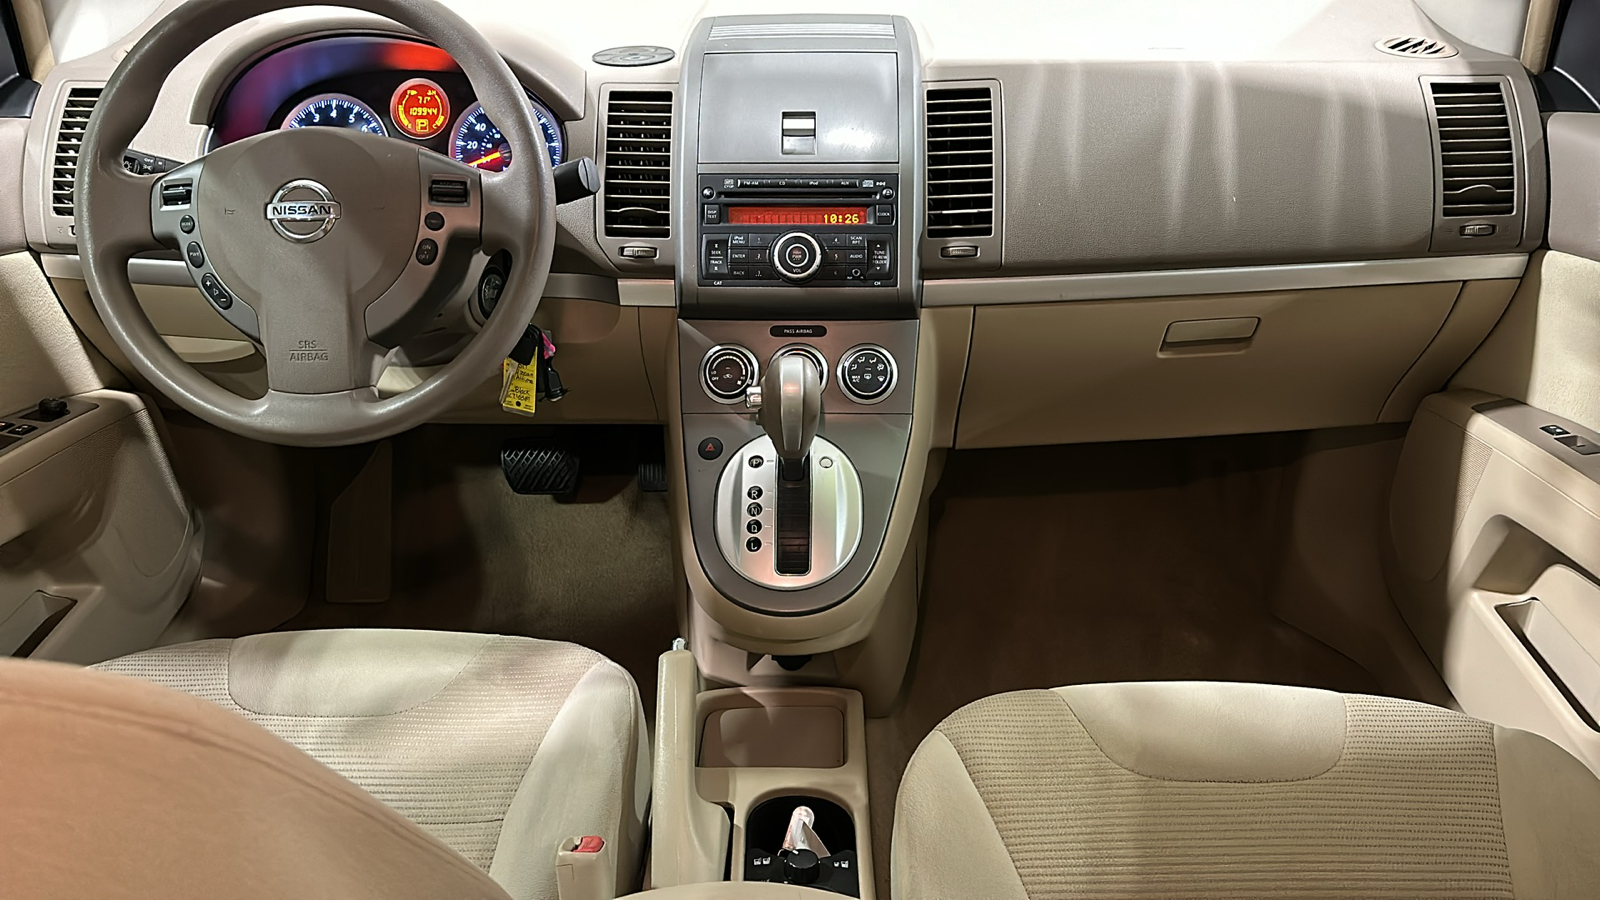 2011 Nissan Sentra 4dr Sedan I4 CVT 2.0 S 13